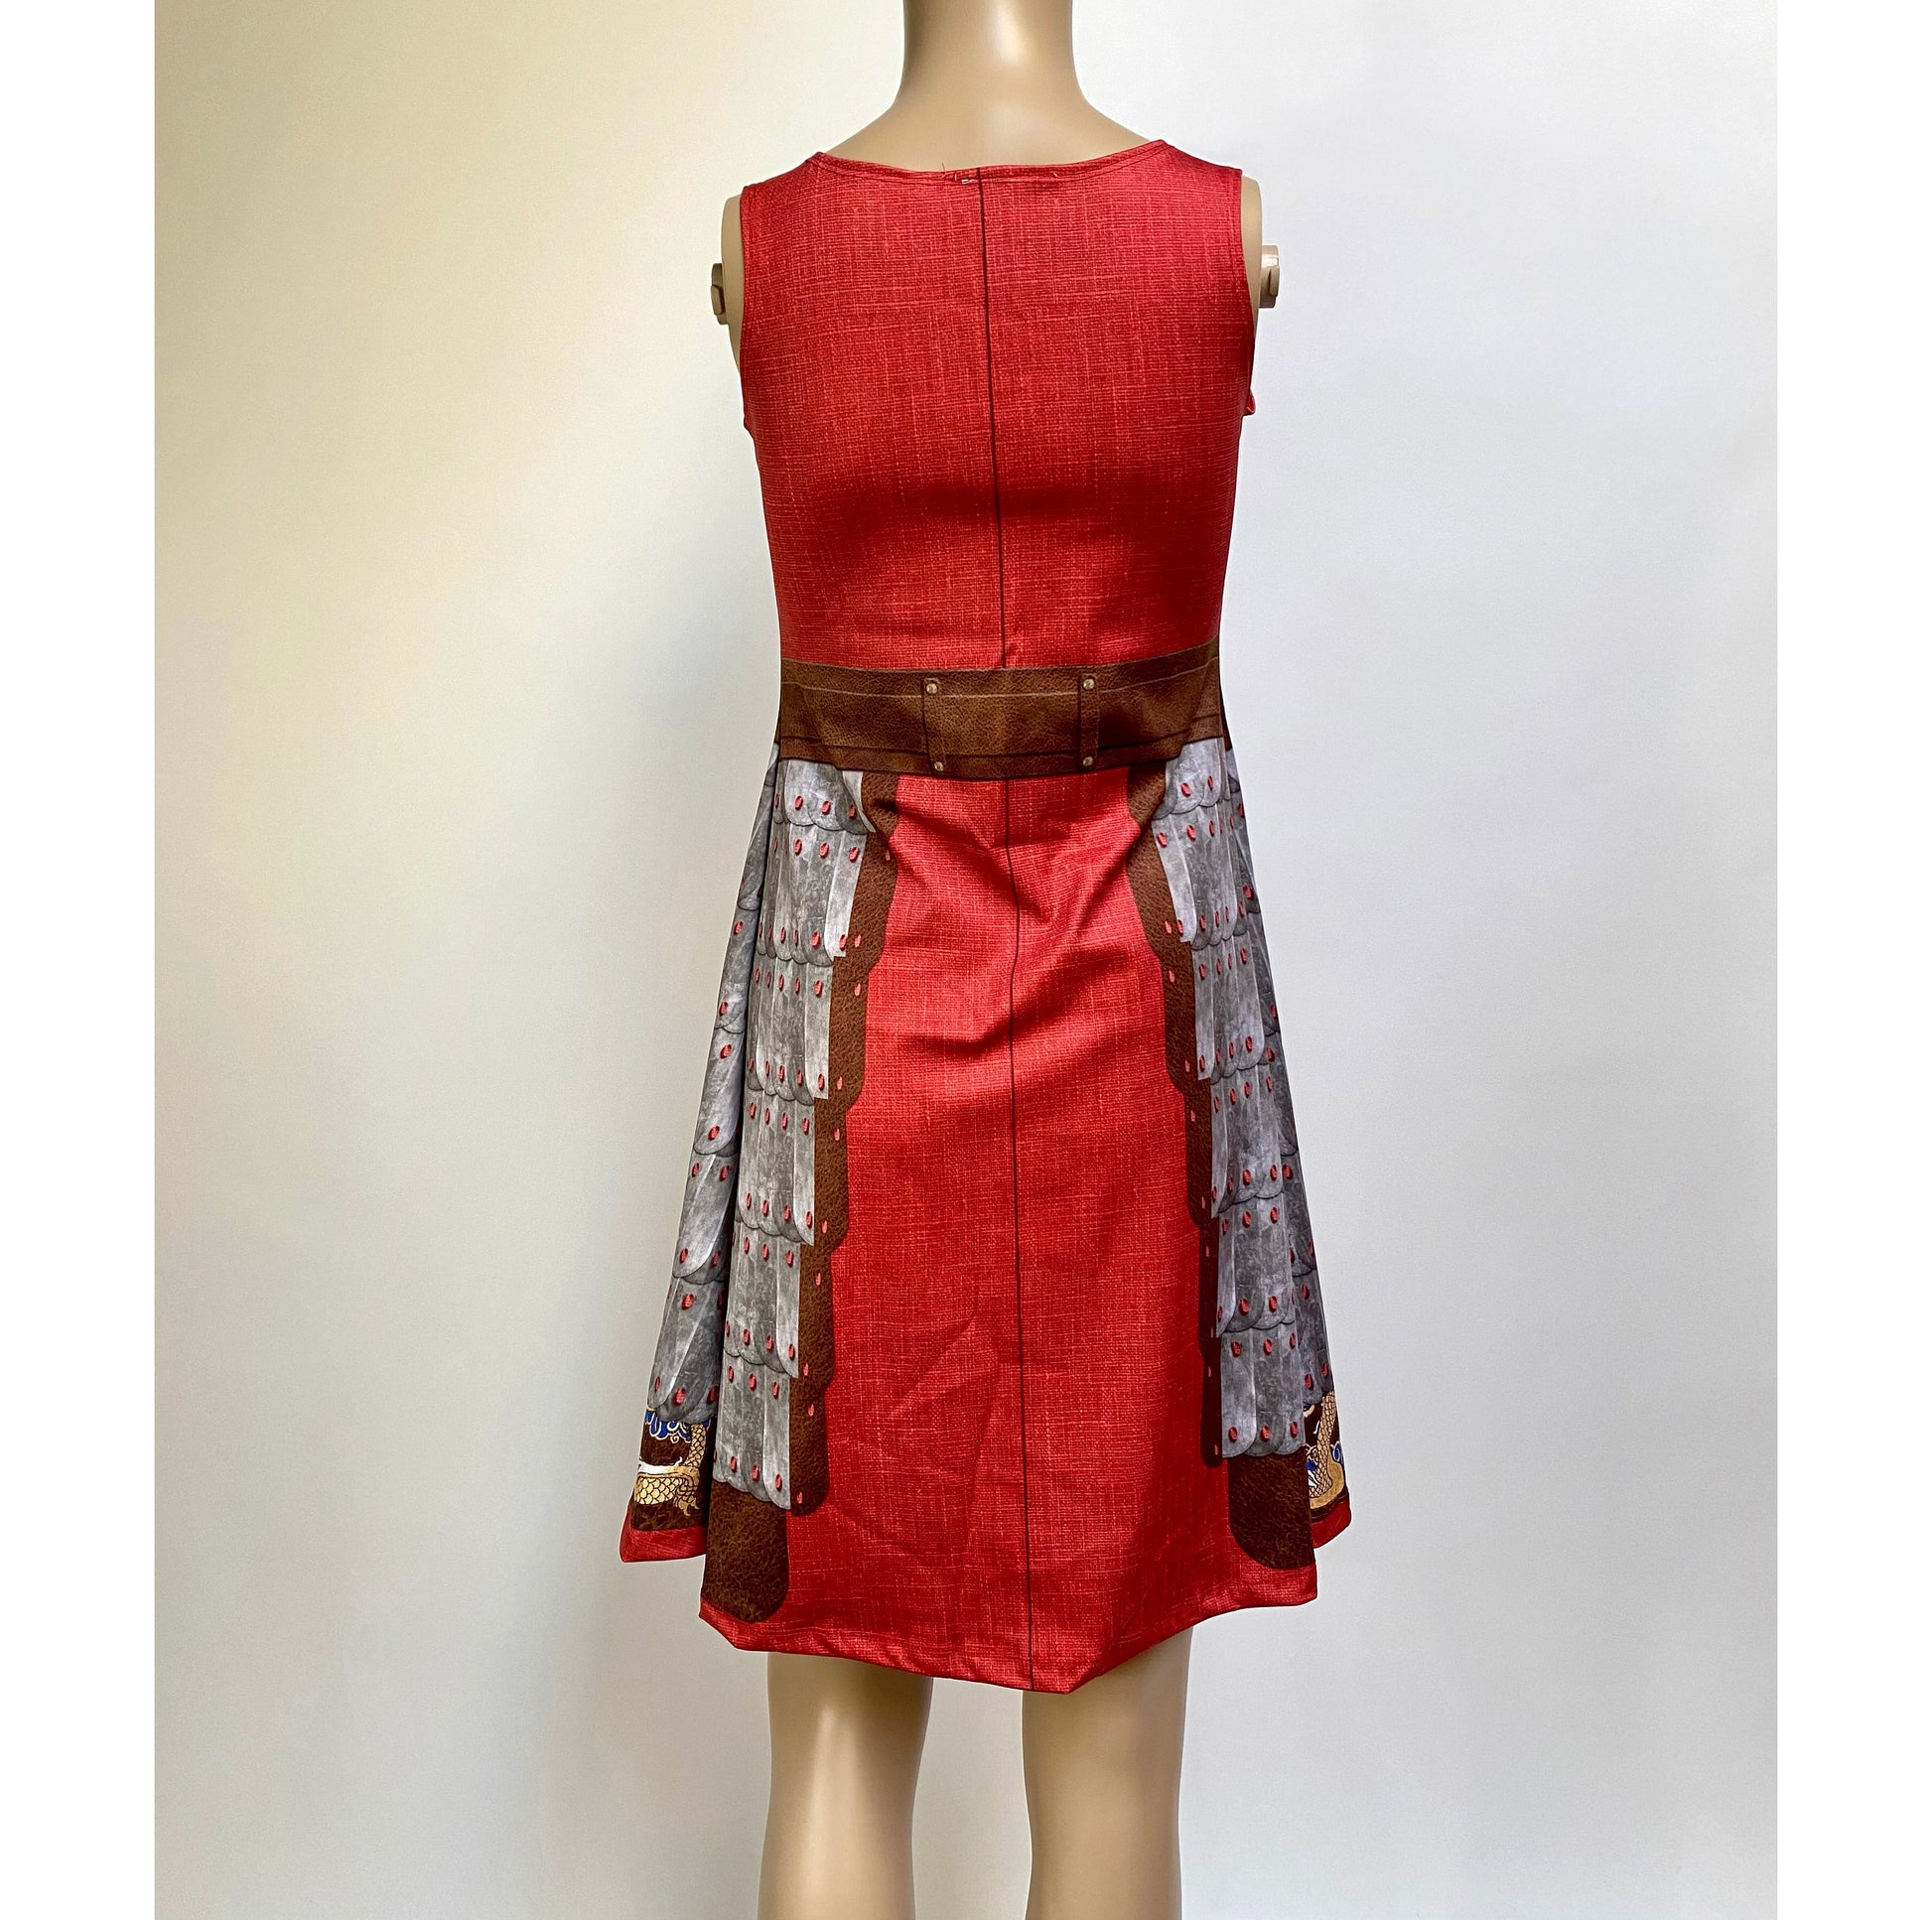 Mulan Live Action Inspired Sleeveless Dress